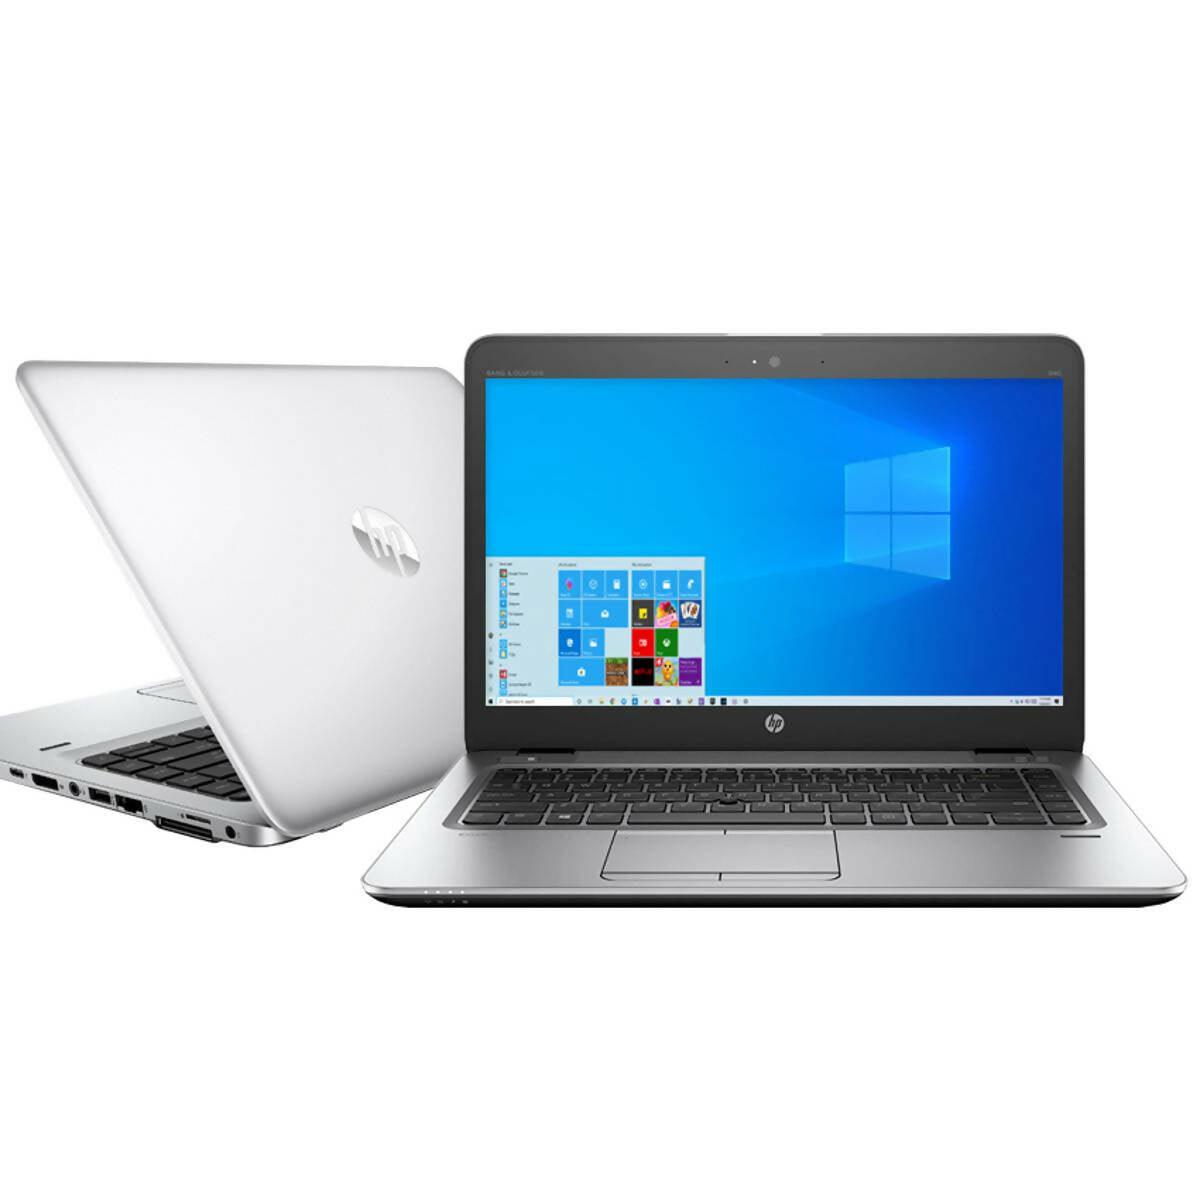 HP EliteBook 840 G4 Laptop Core i5 – 7th Gen., 8GB Ram, 256GB SSD - ValueBox